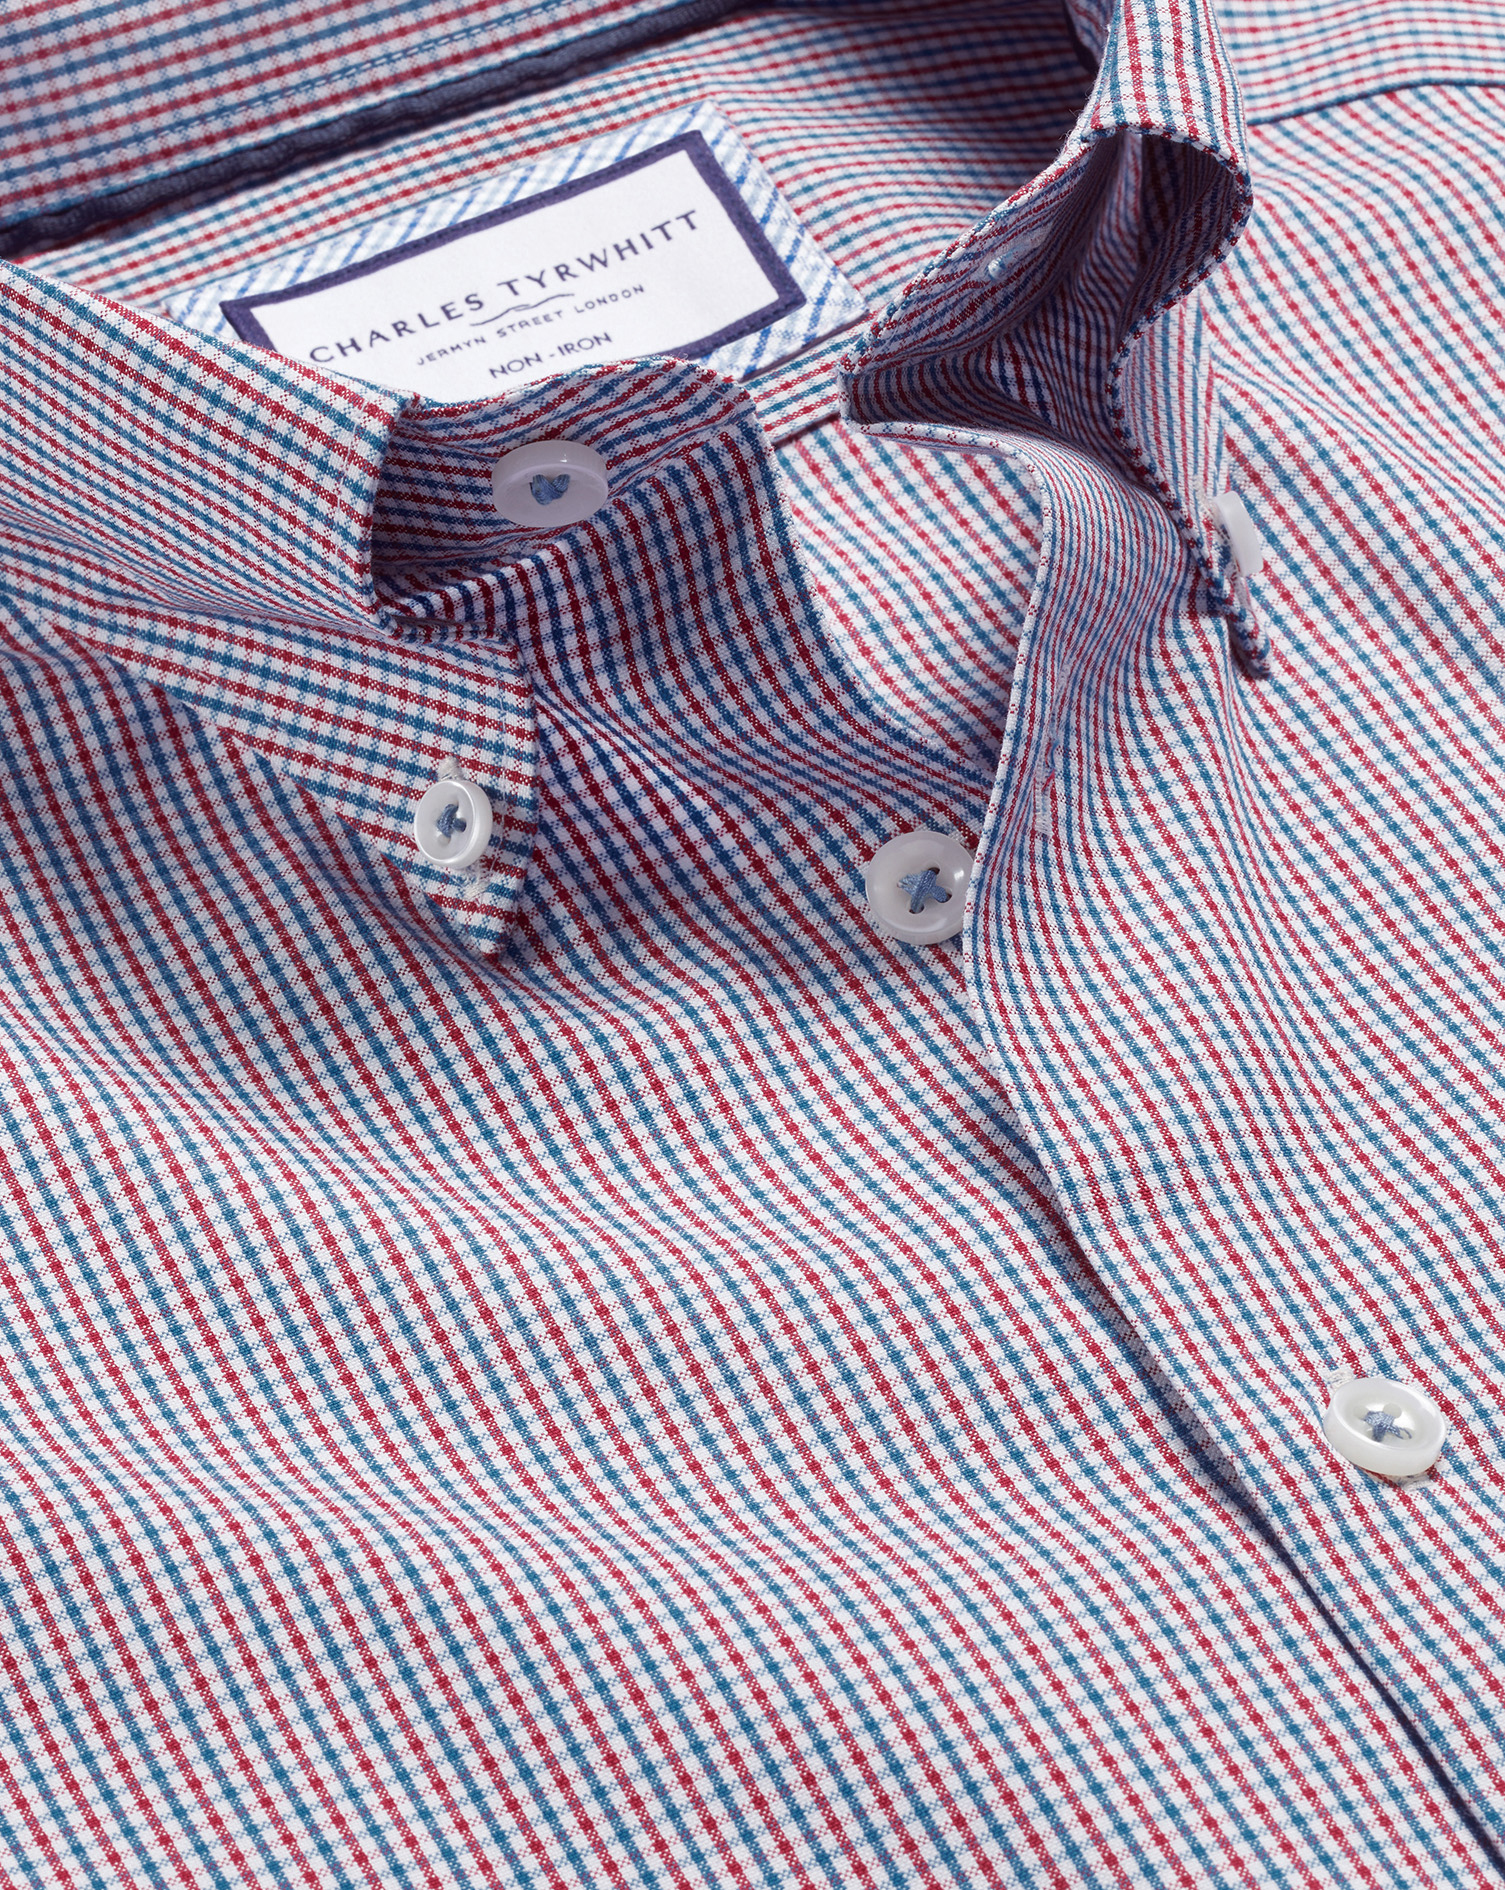 Charles Tyrwhitt Men's  Button-down Collar Non-iron Gingham Check Dress Shirt In Red